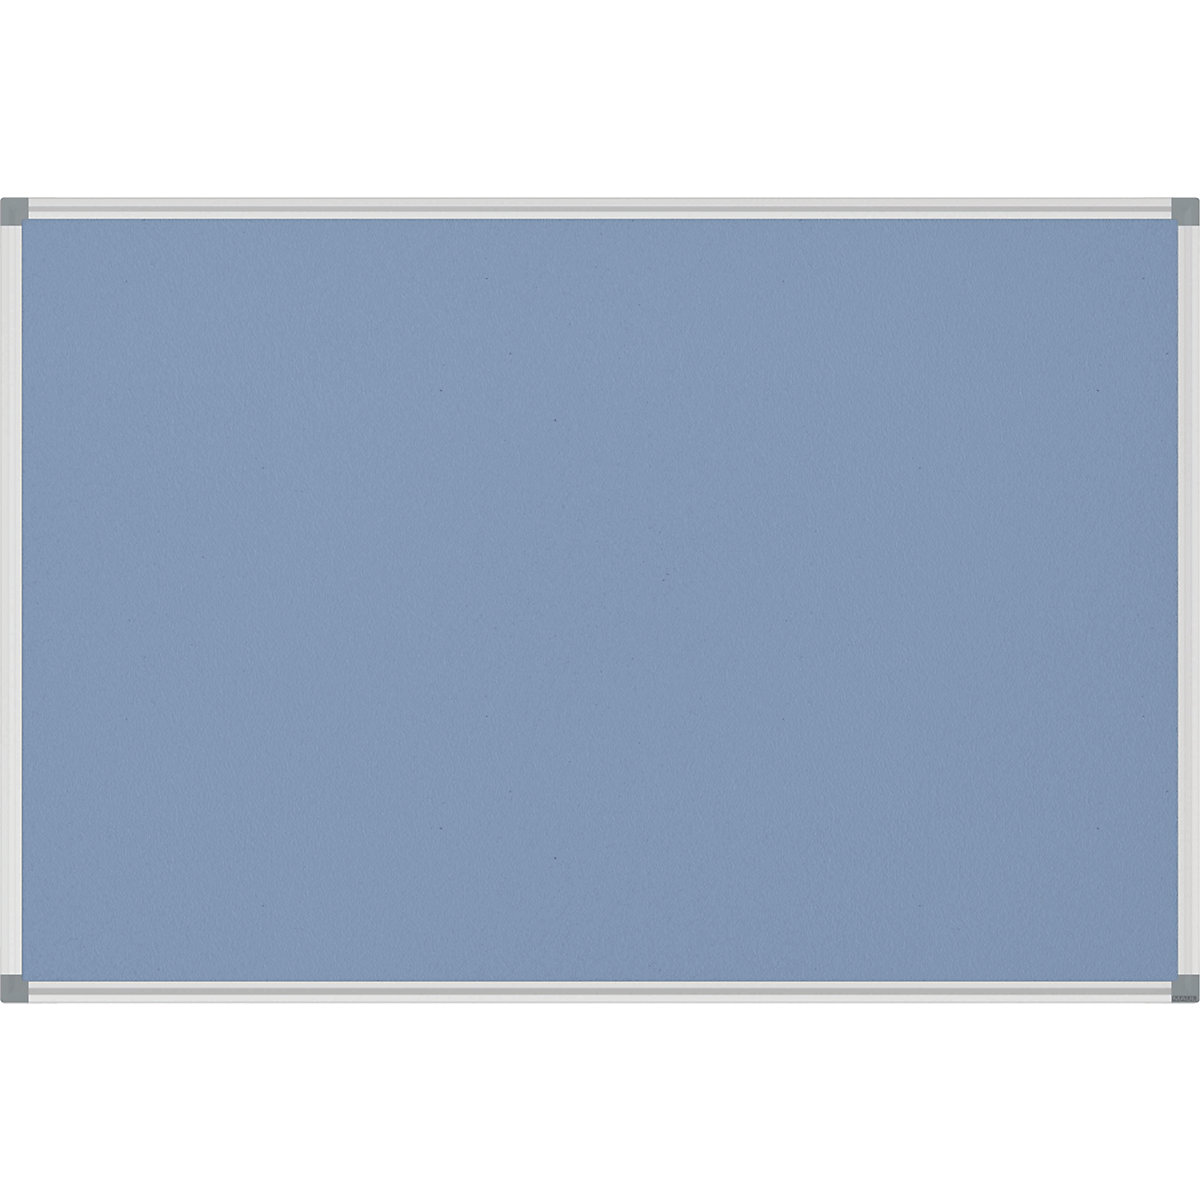 Pinboard STANDARD – MAUL, bekleding van vilt, lichtblauw, b x h = 900 x 600 mm-5